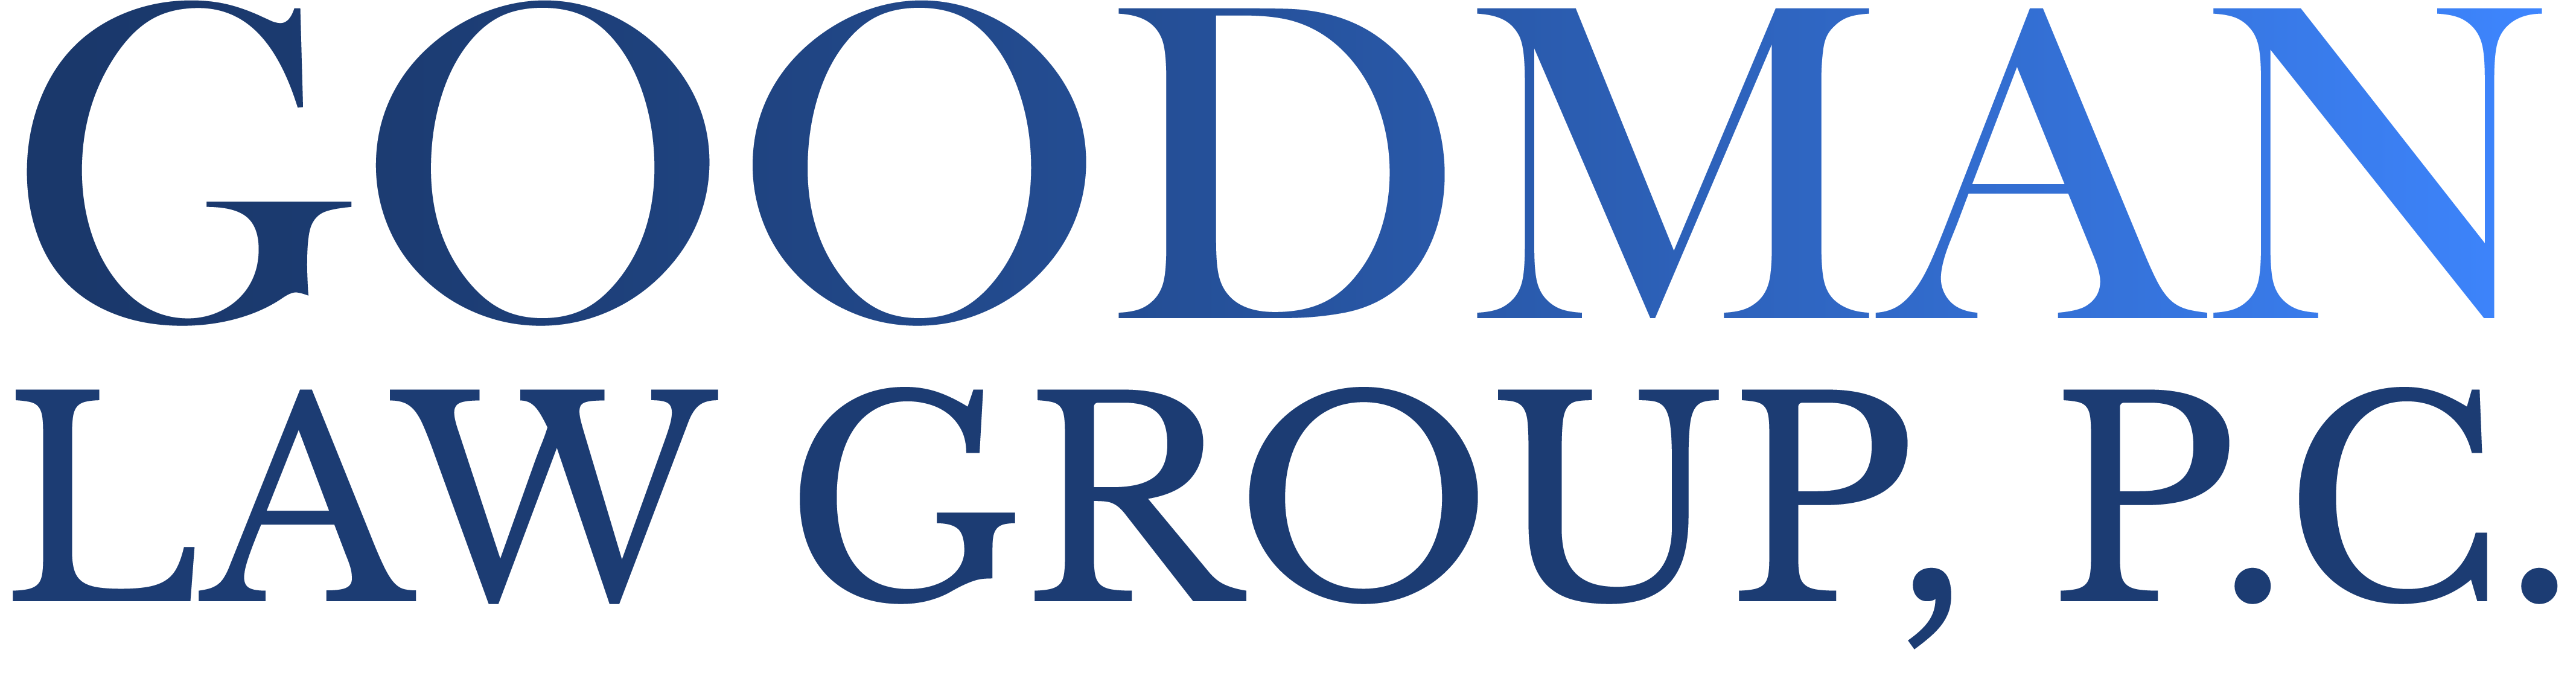 Company Logo For Goodman Law Group'